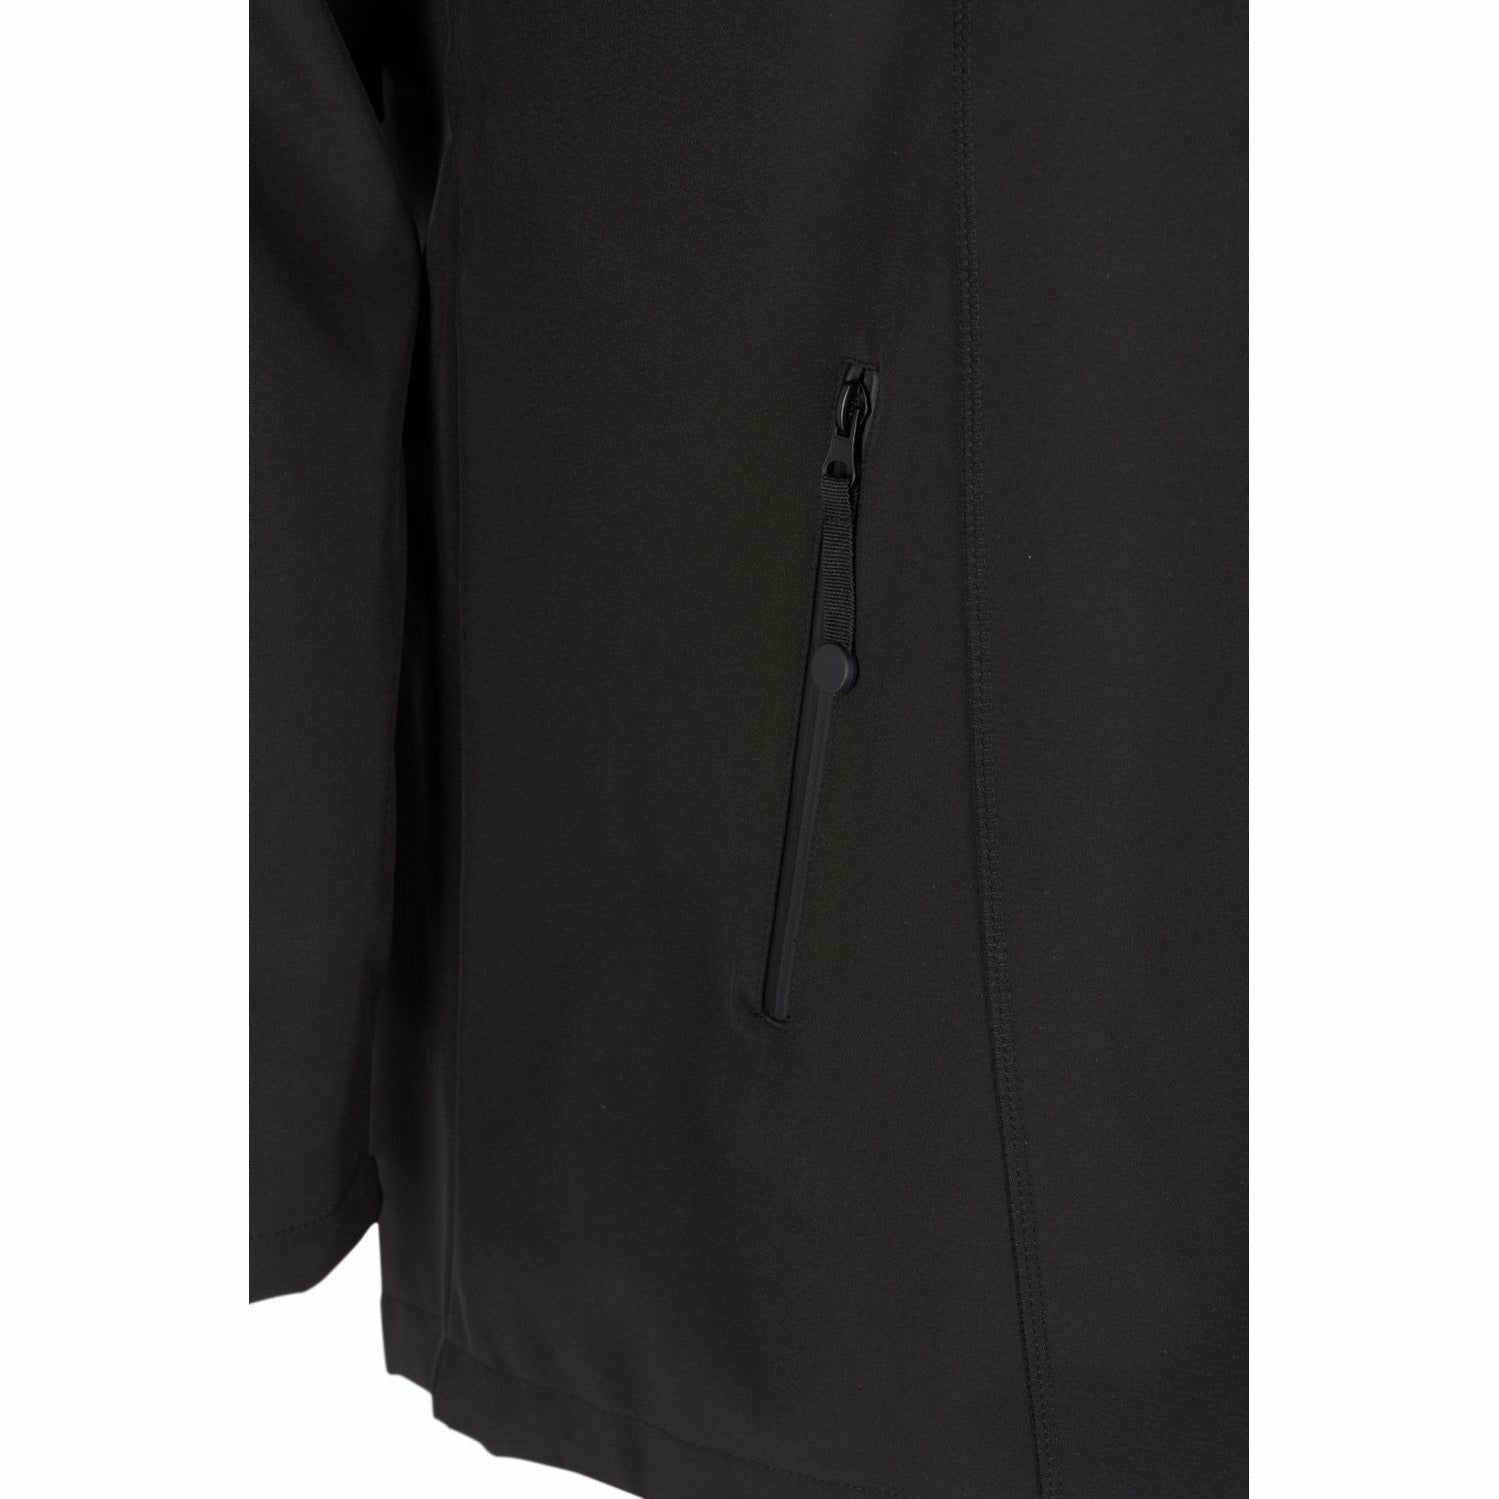 Zizzi Softshell Jacket in Black - Wardrobe Plus